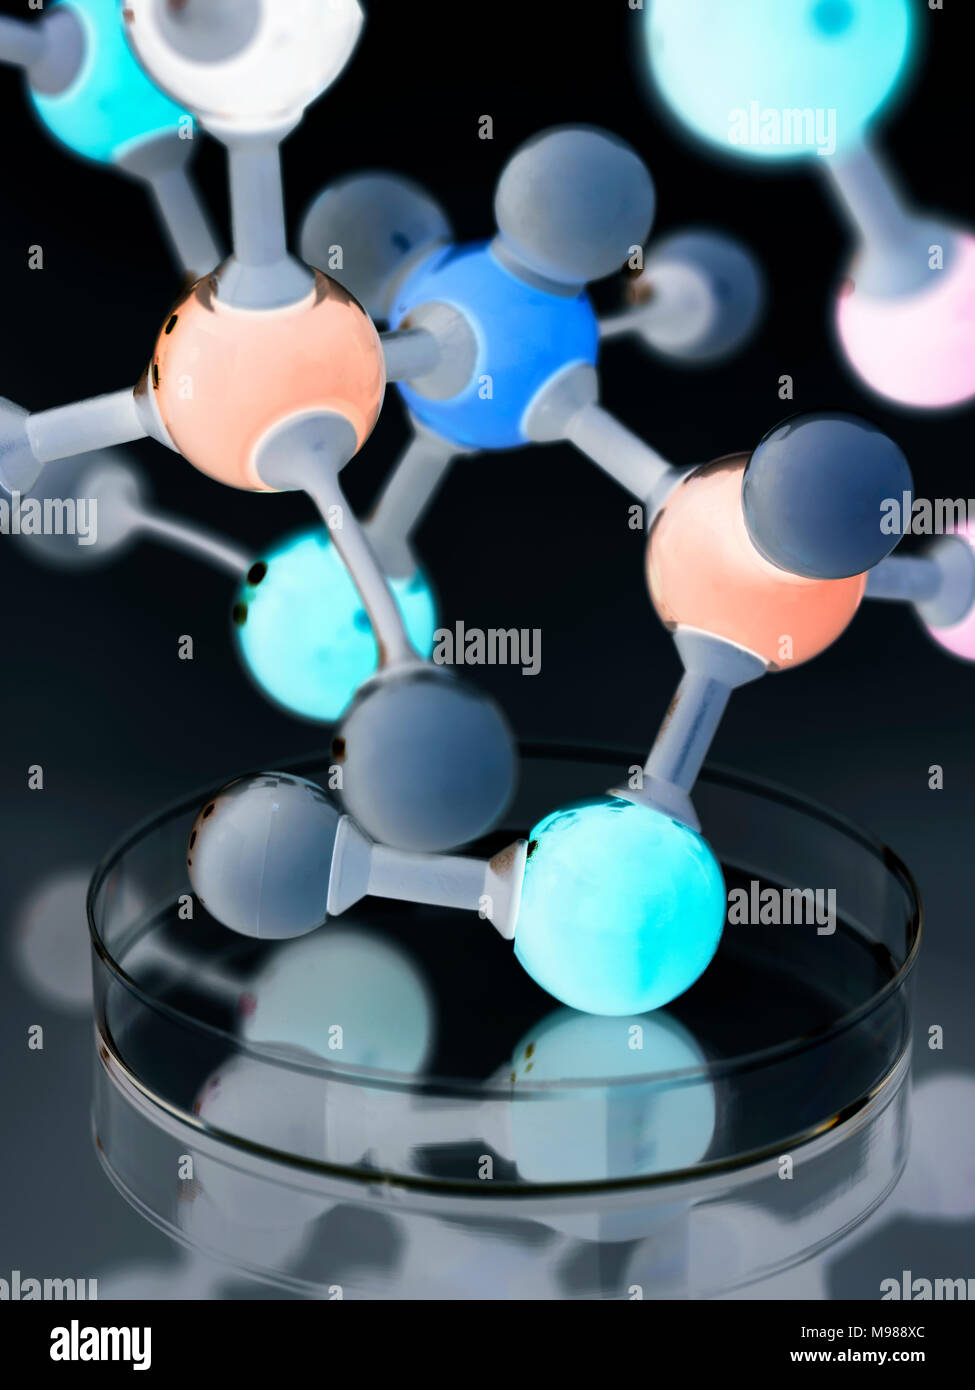 Molecular model in petri dish Stock Photo